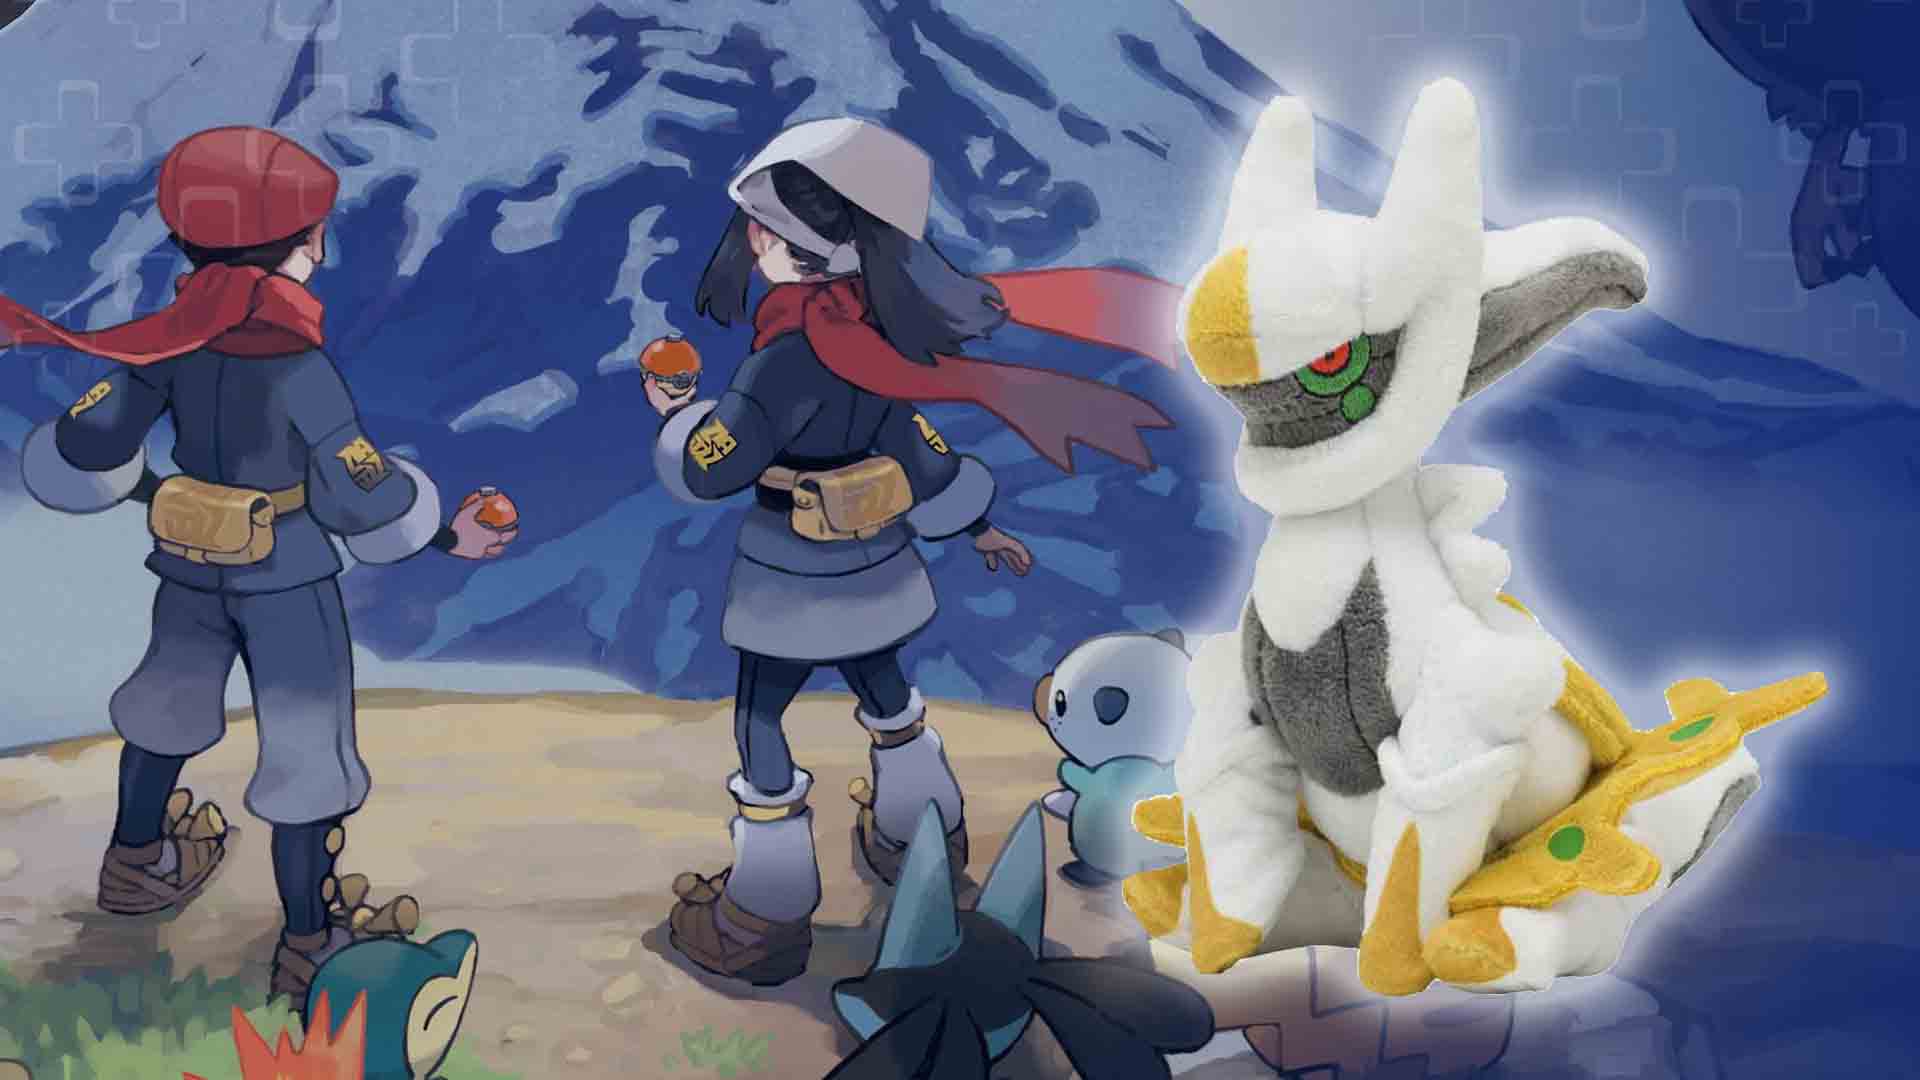 Pokémon Legends: Arceus pre-order bonus and release date guide